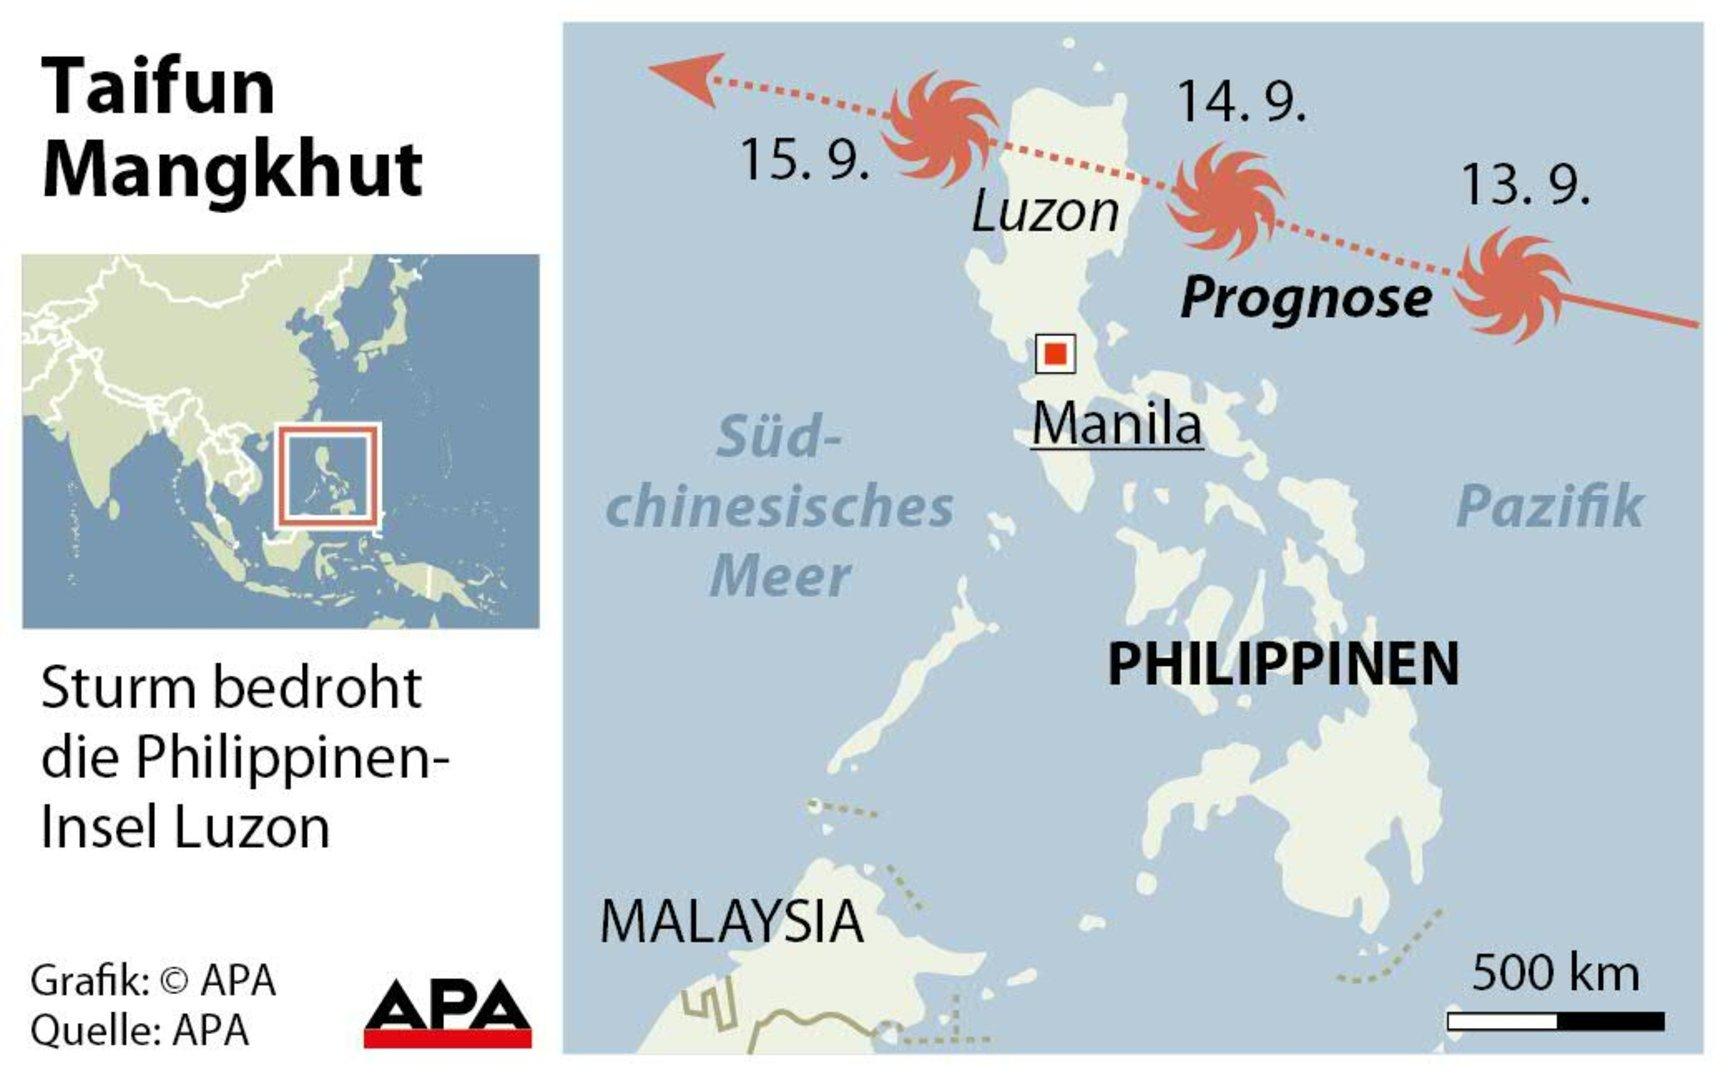 Philippinen: Taifun Mangkhut auf Kategorie vier hochgestuft | kurier.at